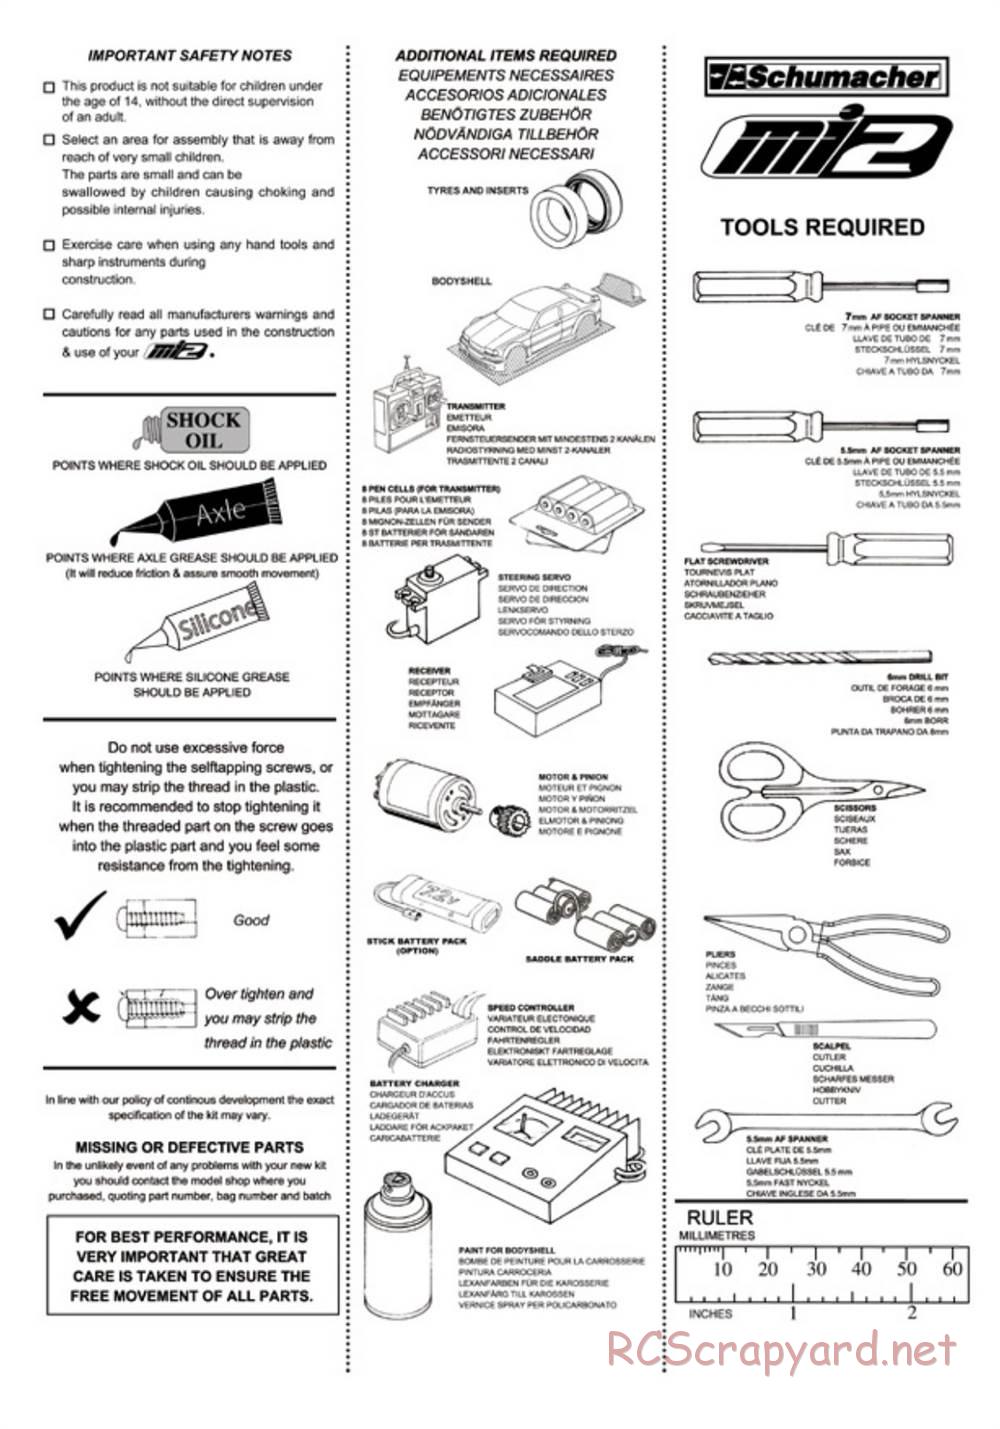 Schumacher - Mi2 - Manual - Page 2